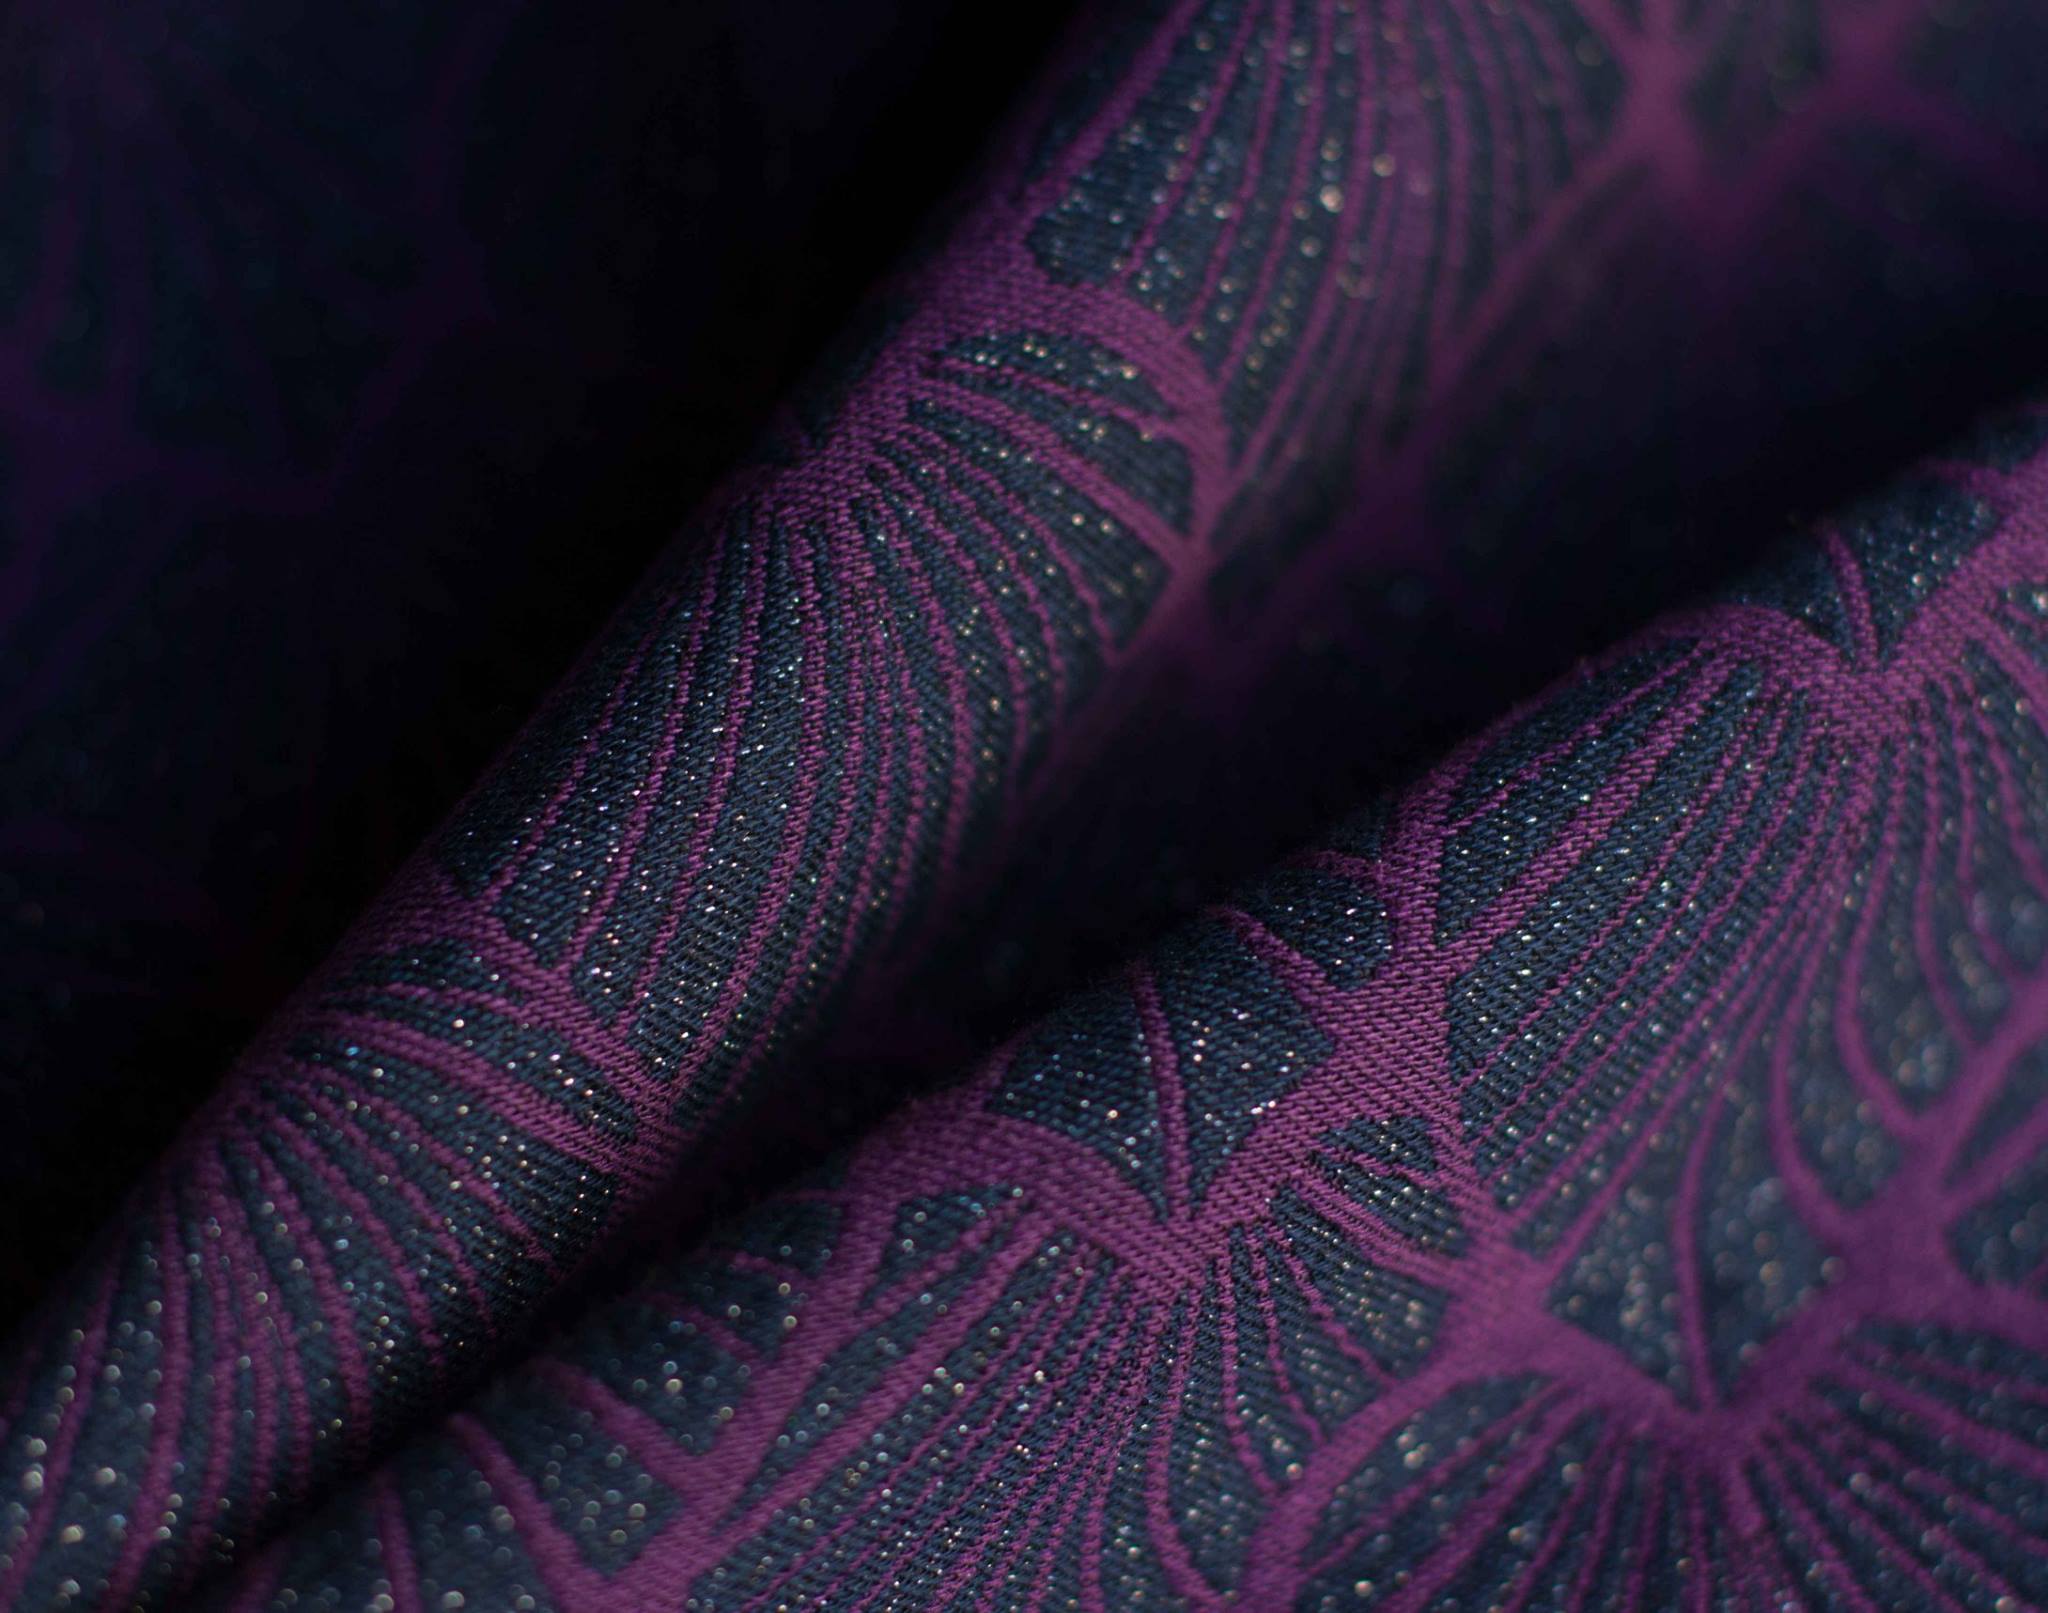 Linuschka Ipomée Ipomee Colombina Wrap (japanese silk, sparkles) Image